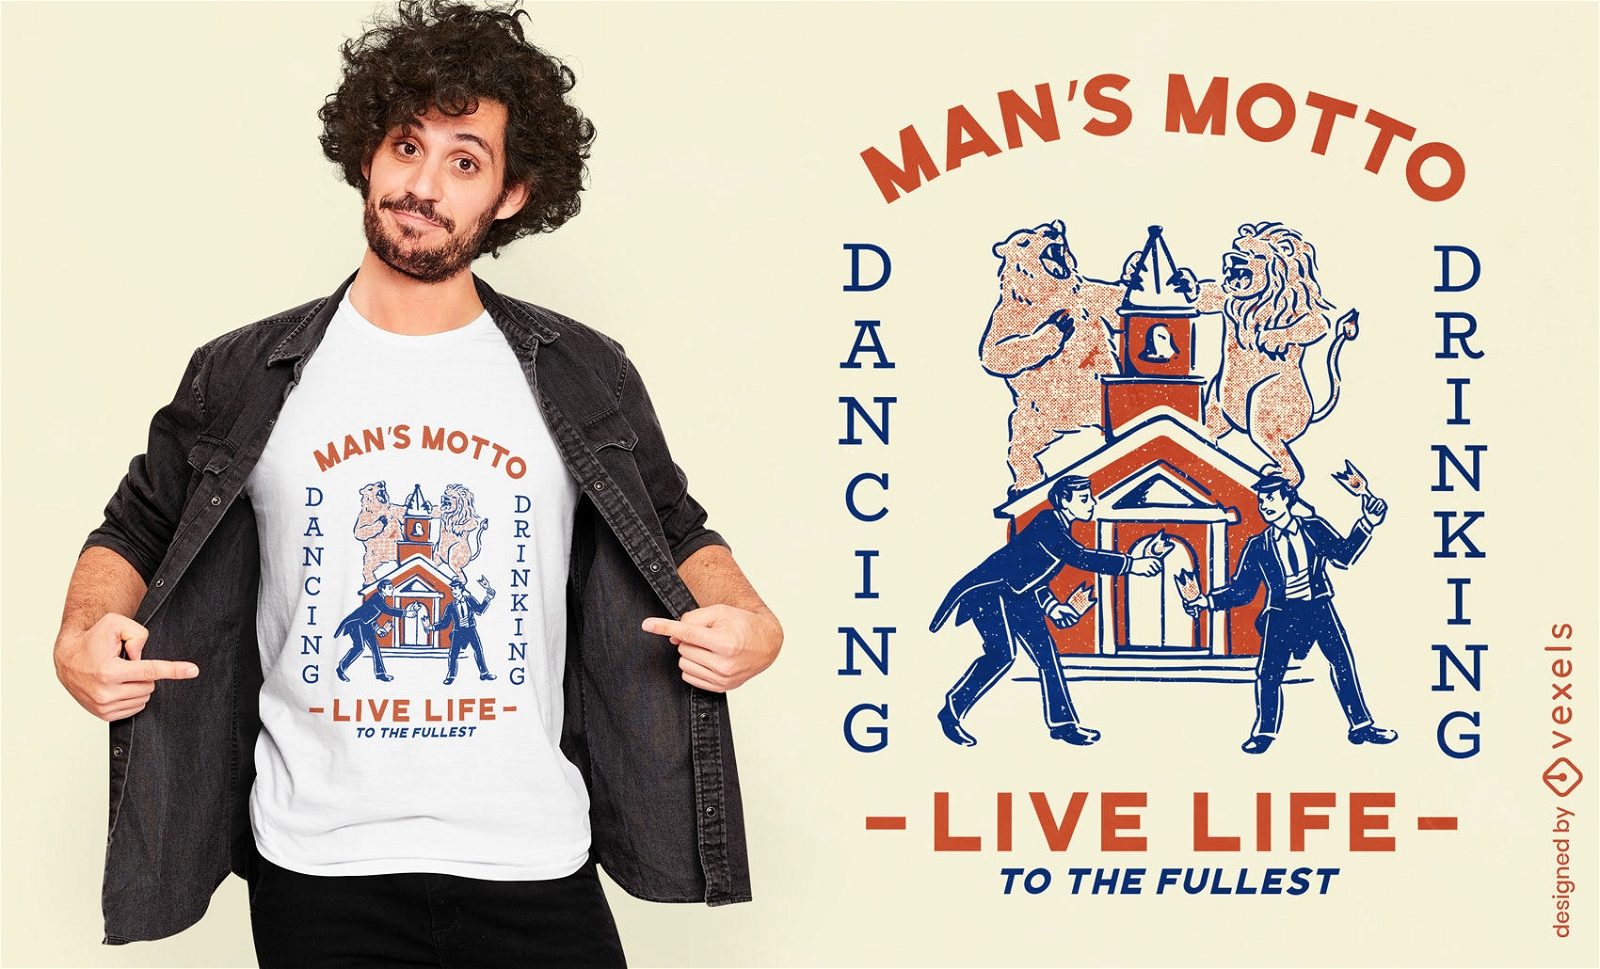 Men 's motto motivational t-shirt design